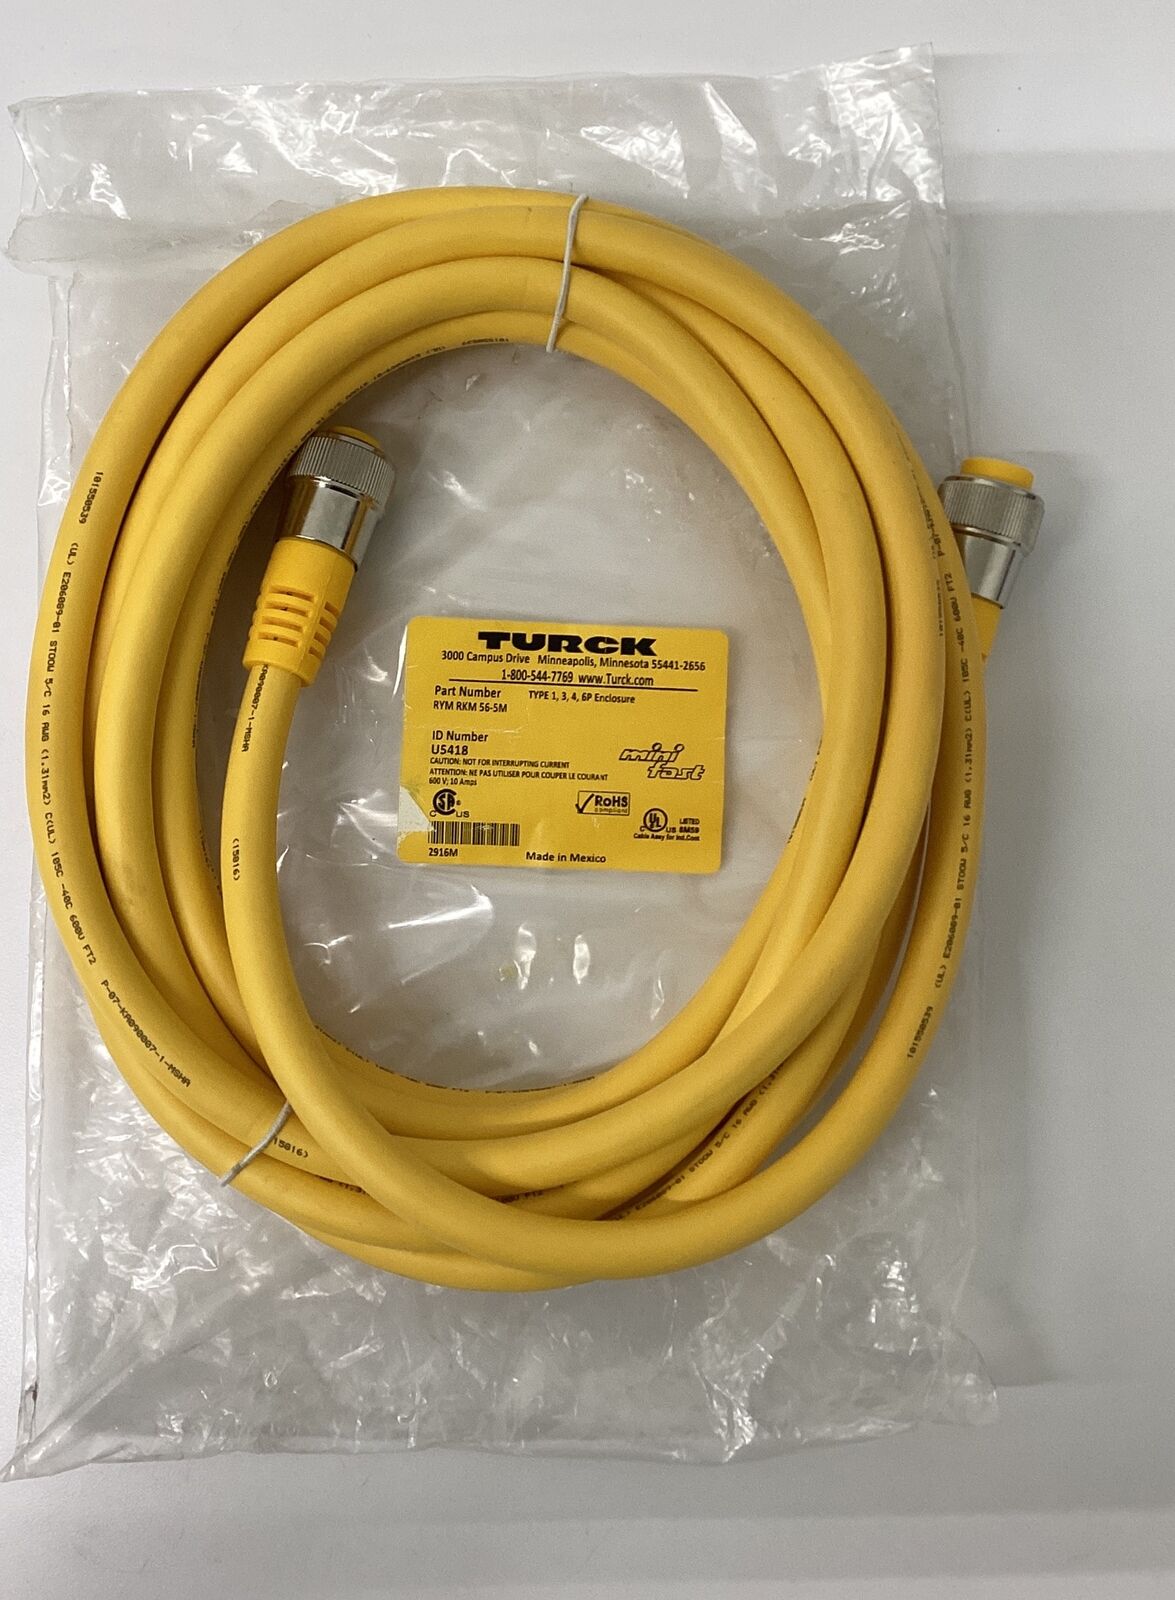 Turck RYM-RKM56-5M 5-Pole Male/Female Minifast Cable 5-meters (CBL162) - 0